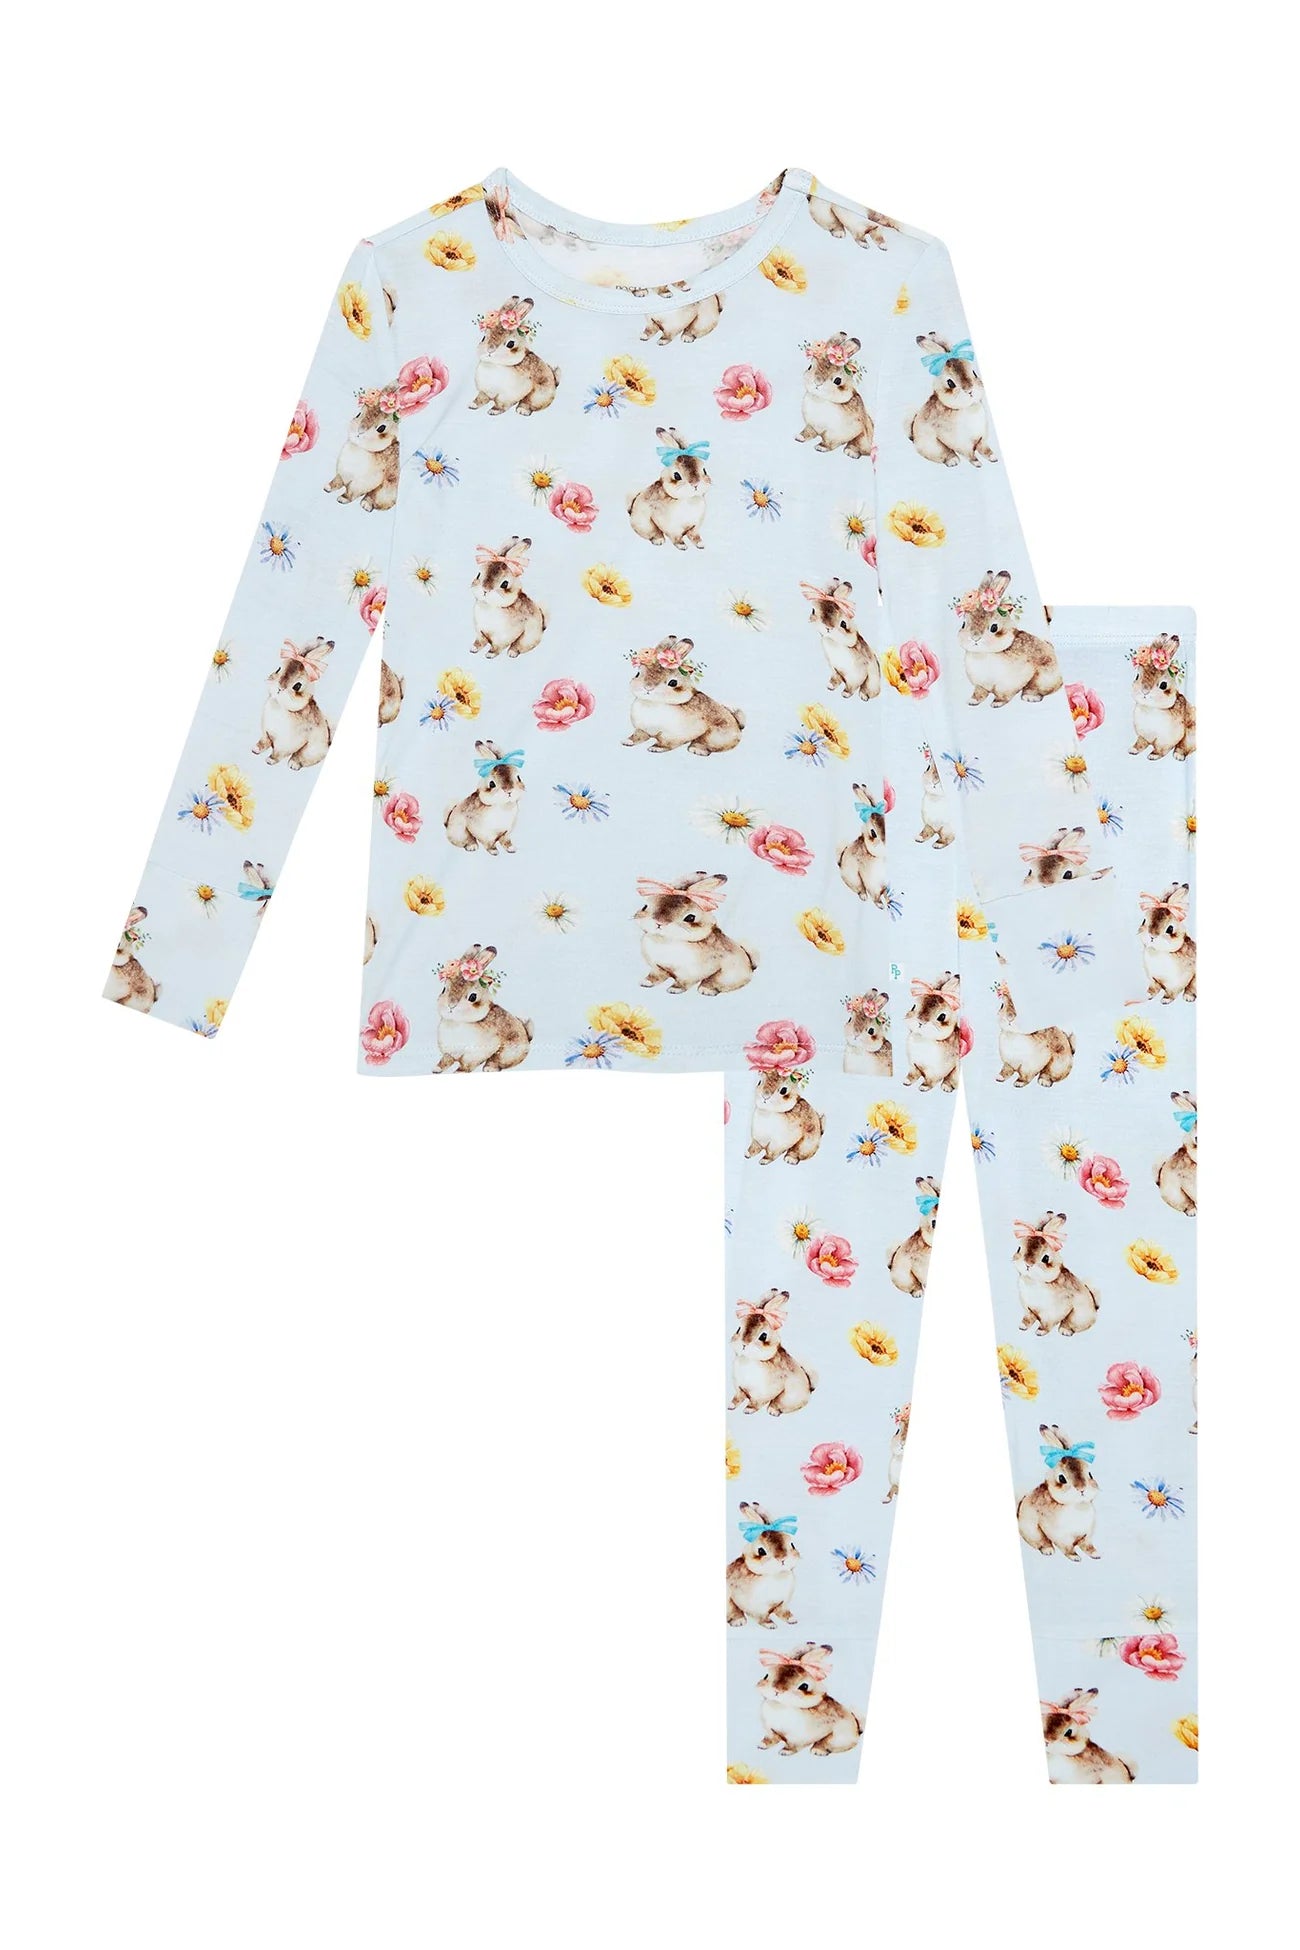 Posh Peanut girls long sleeve pajama bundle 3T - Girls tops & t-shirts